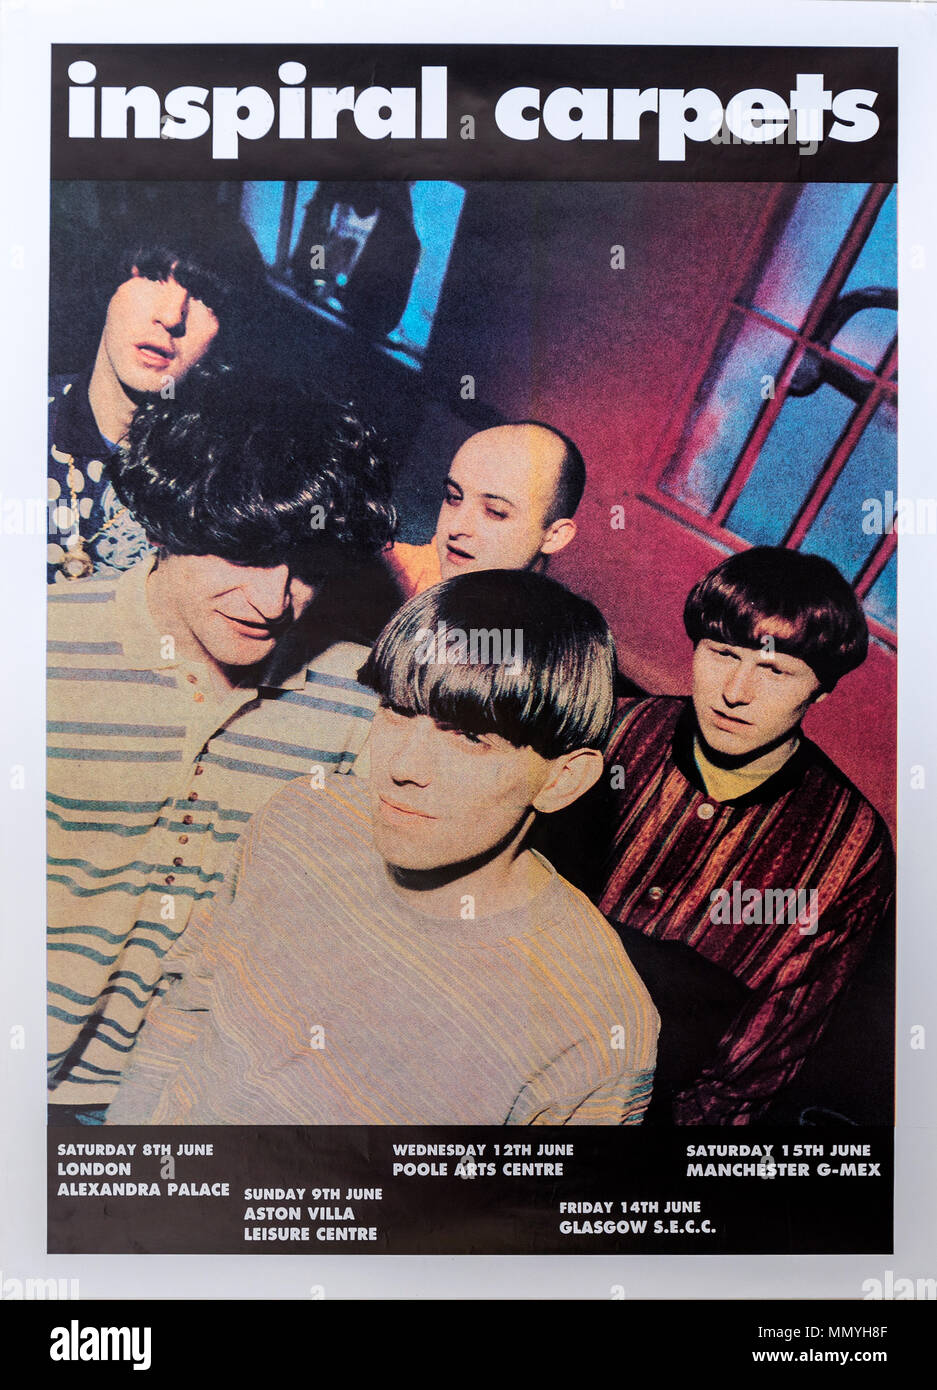 Inspiral Carpets 1990 UK tour, Musical concert poster Stock Photo